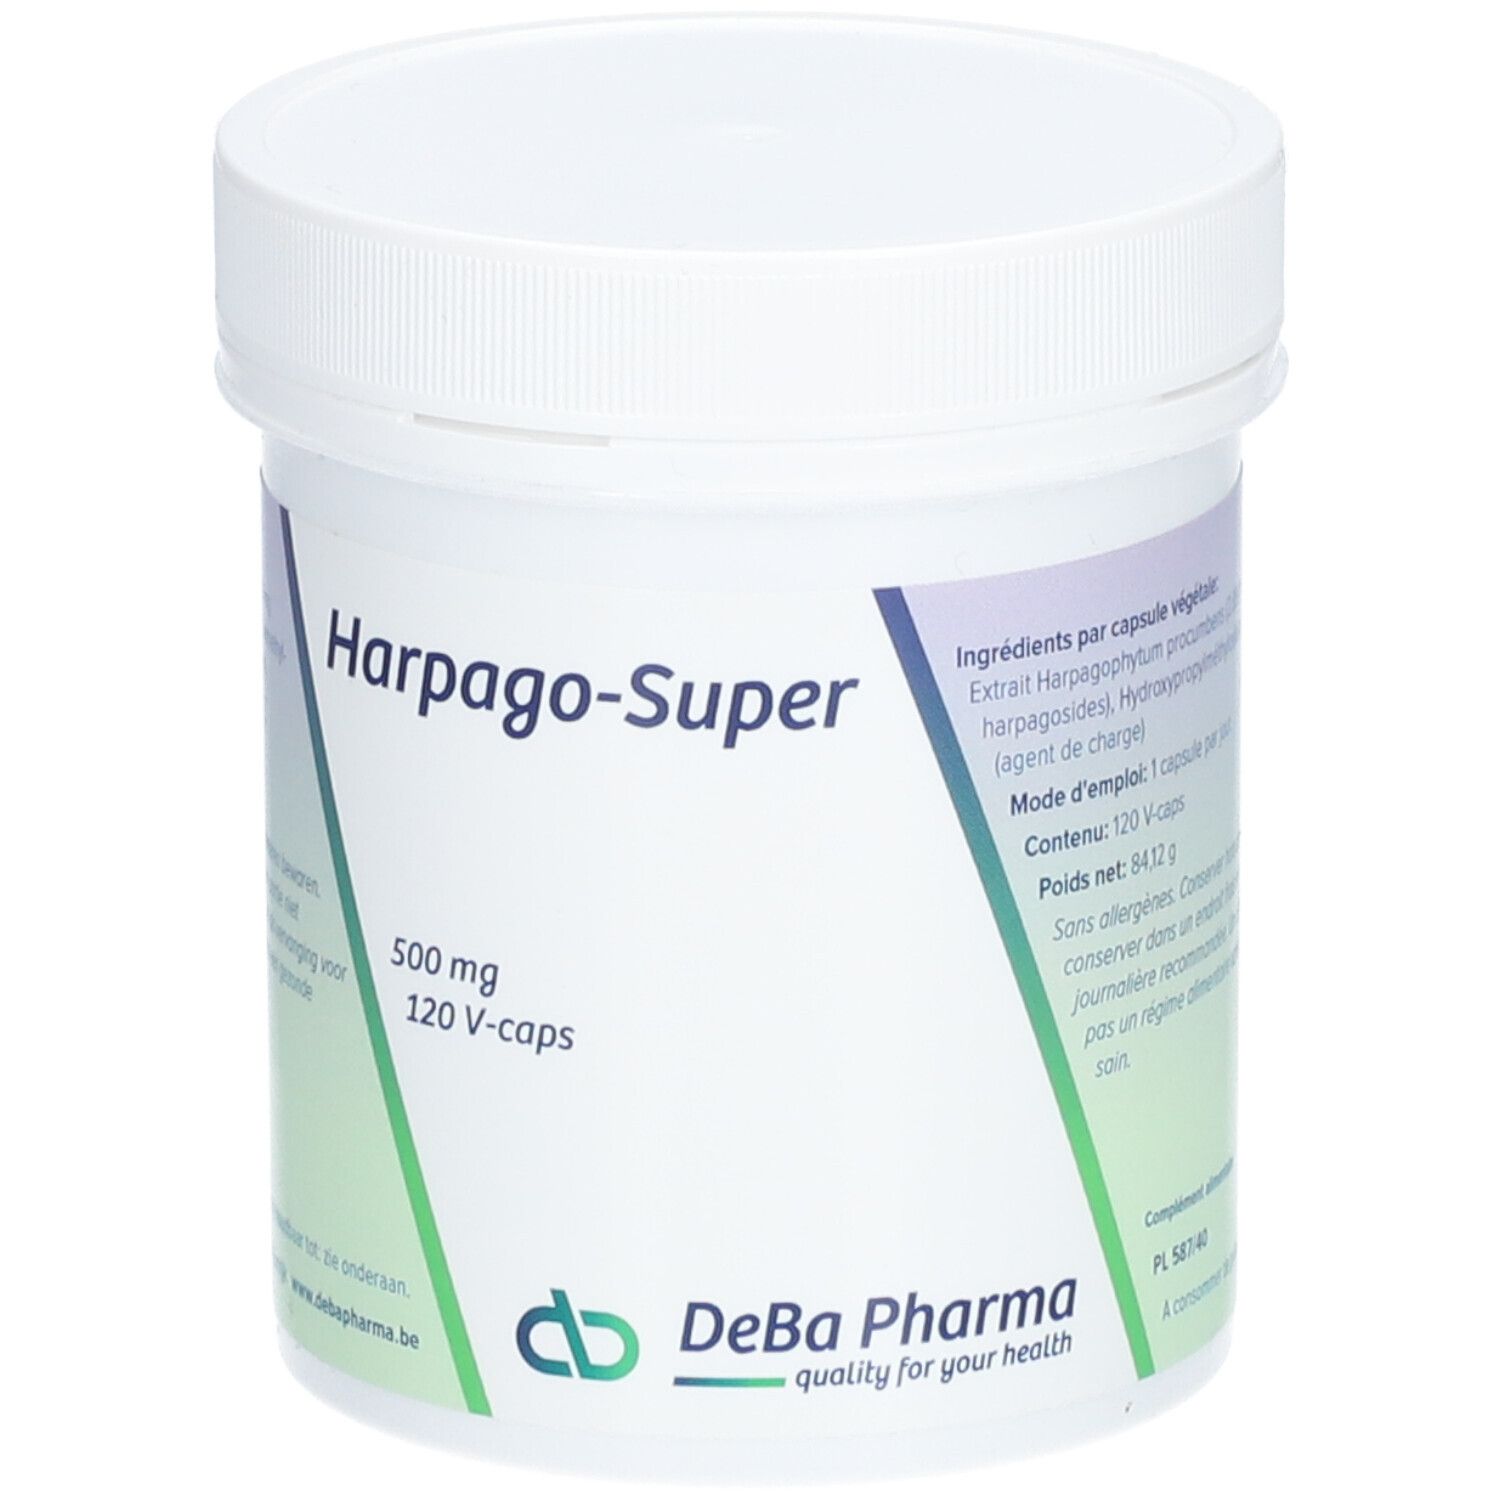 DeBa Pharma Harpago-Super 500mg